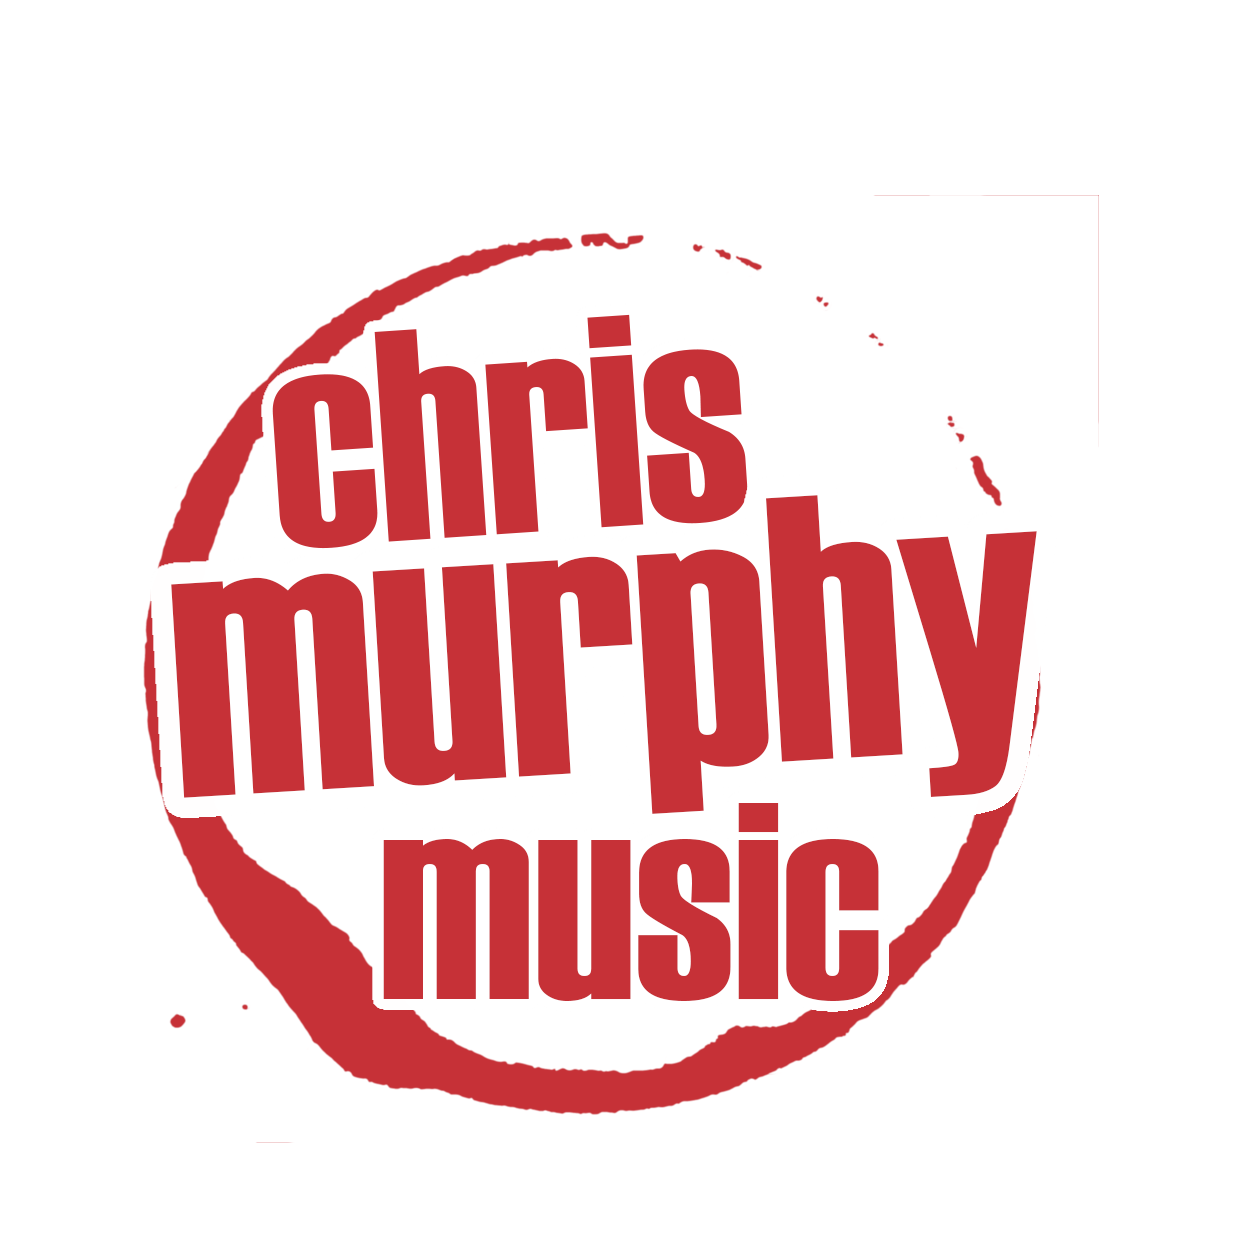 Chris Murphy